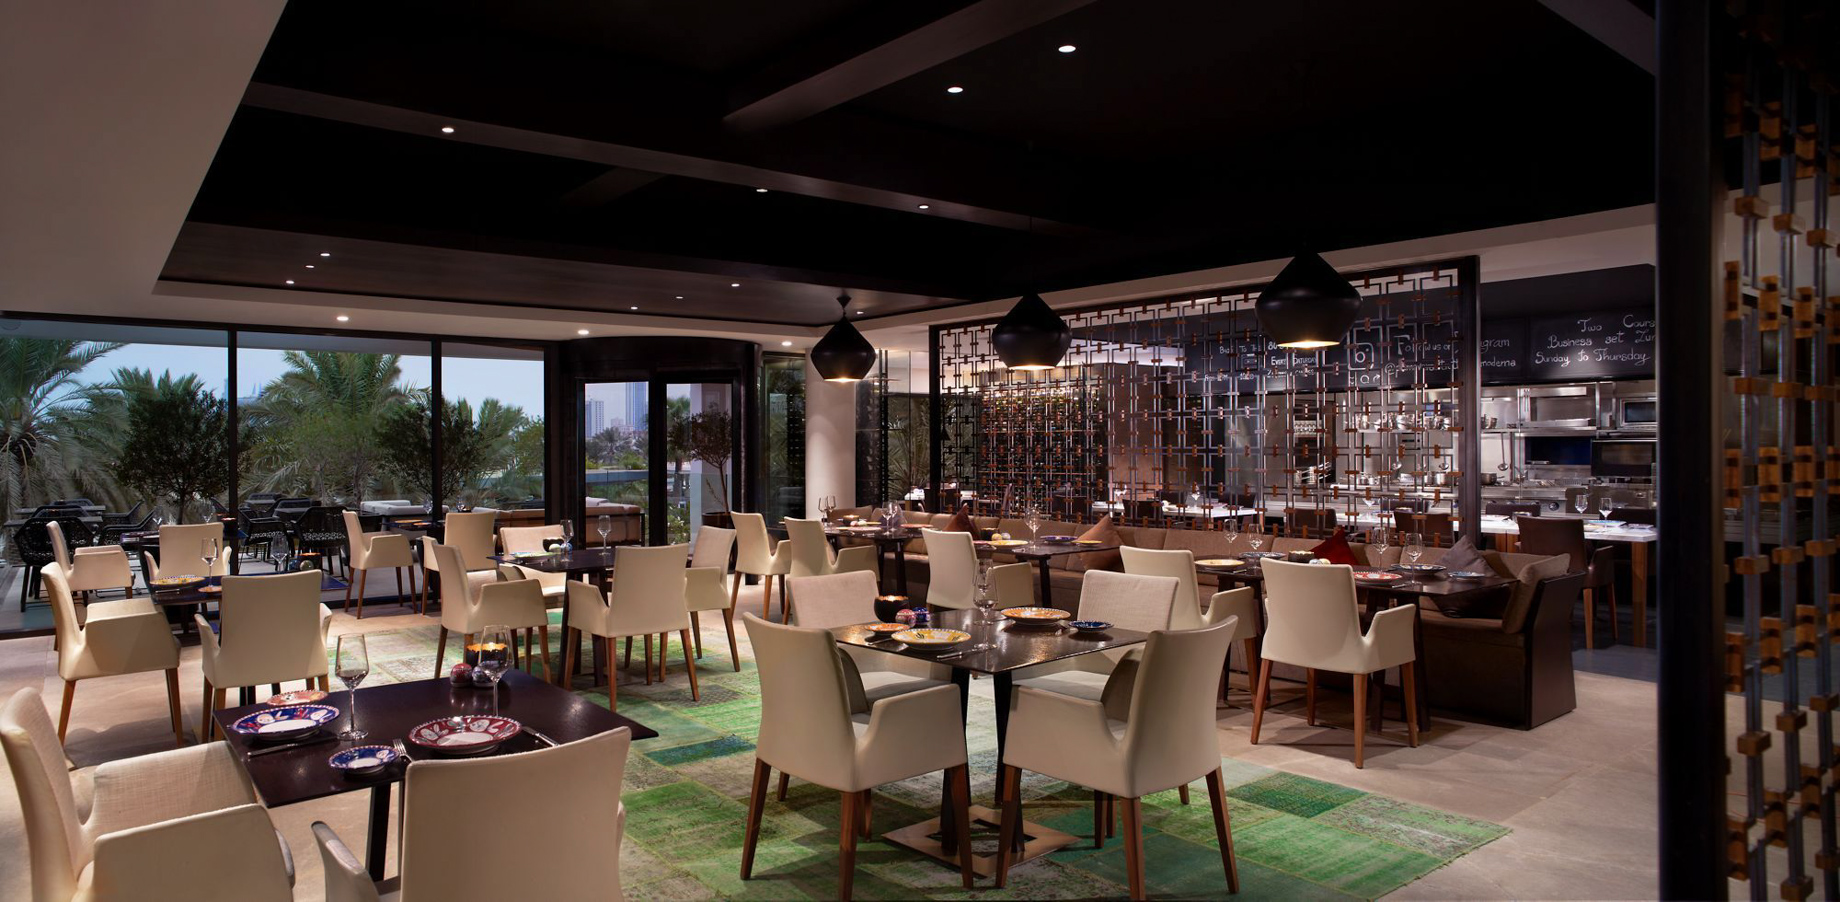 The Ritz-Carlton, Bahrain Resort Hotel - Manama, Bahrain - Primavera Restaurant Osteria Contemporanea Tables